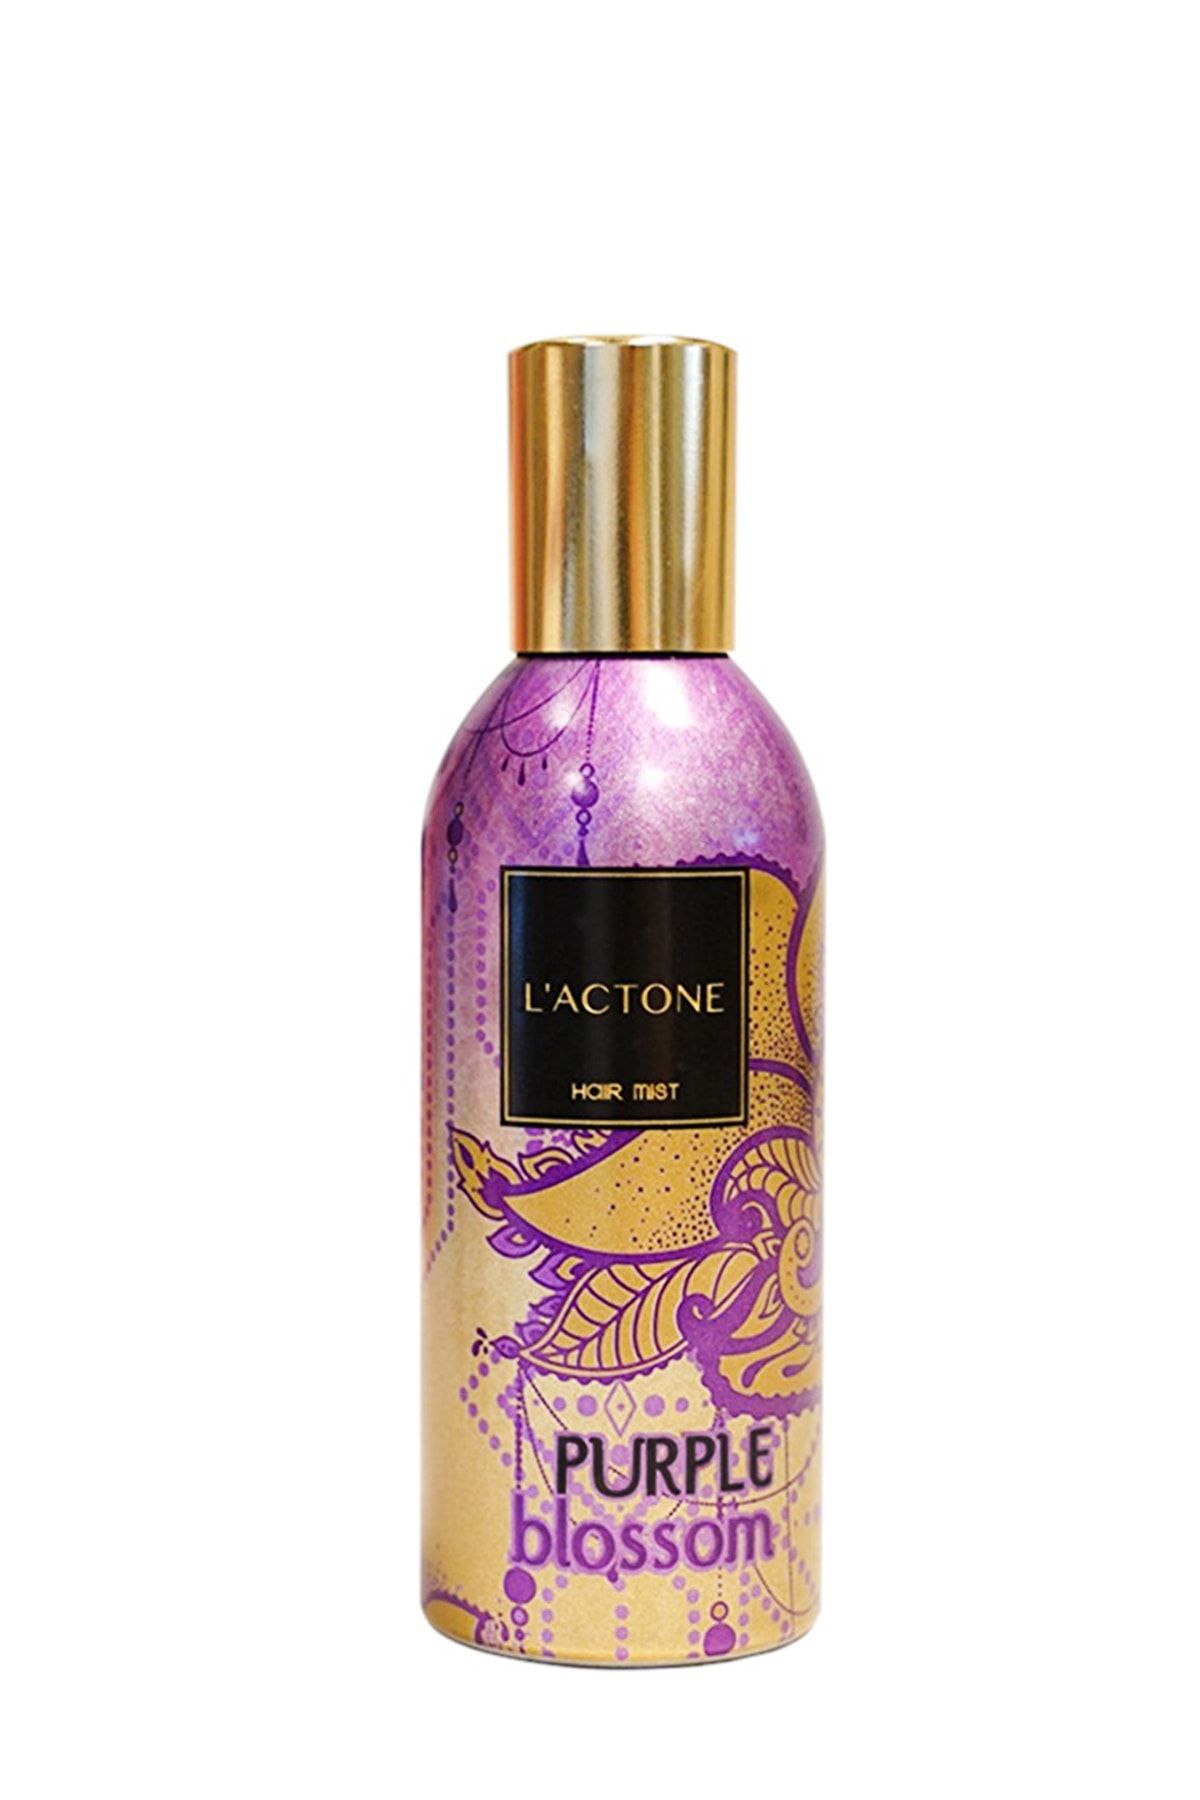 L'ACTONE Hair Mist Purple Blossom